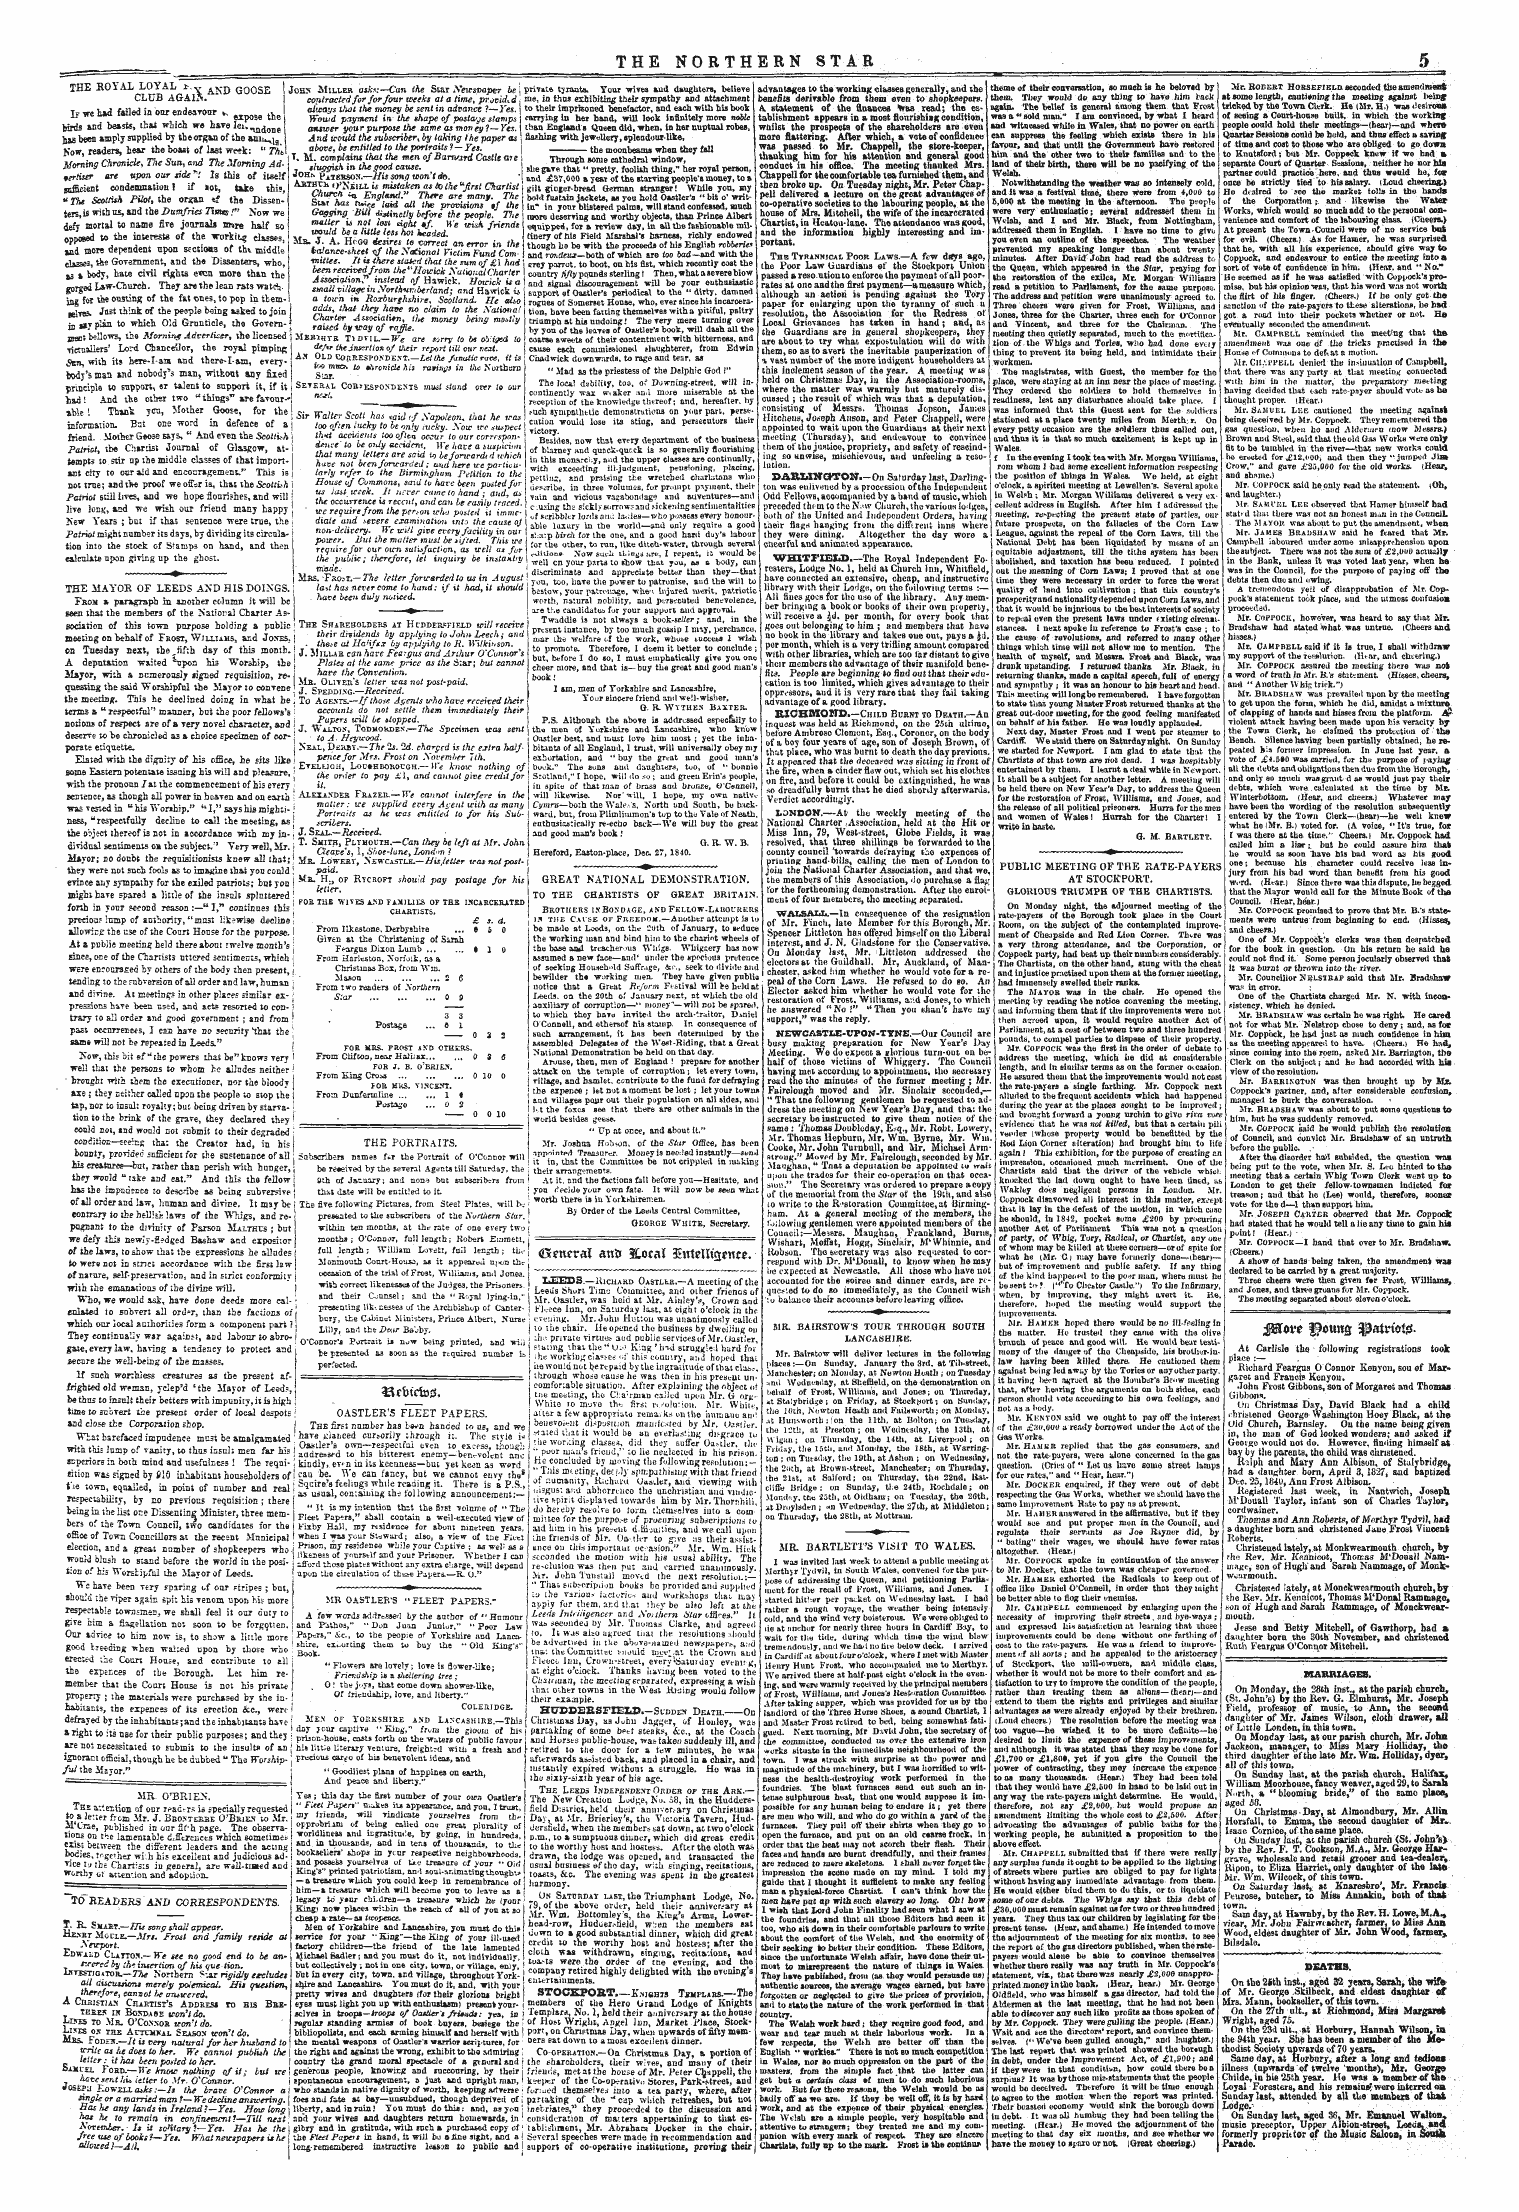 Northern Star (1837-1852): jS F Y, 2nd edition - £U&T'Cbi5,